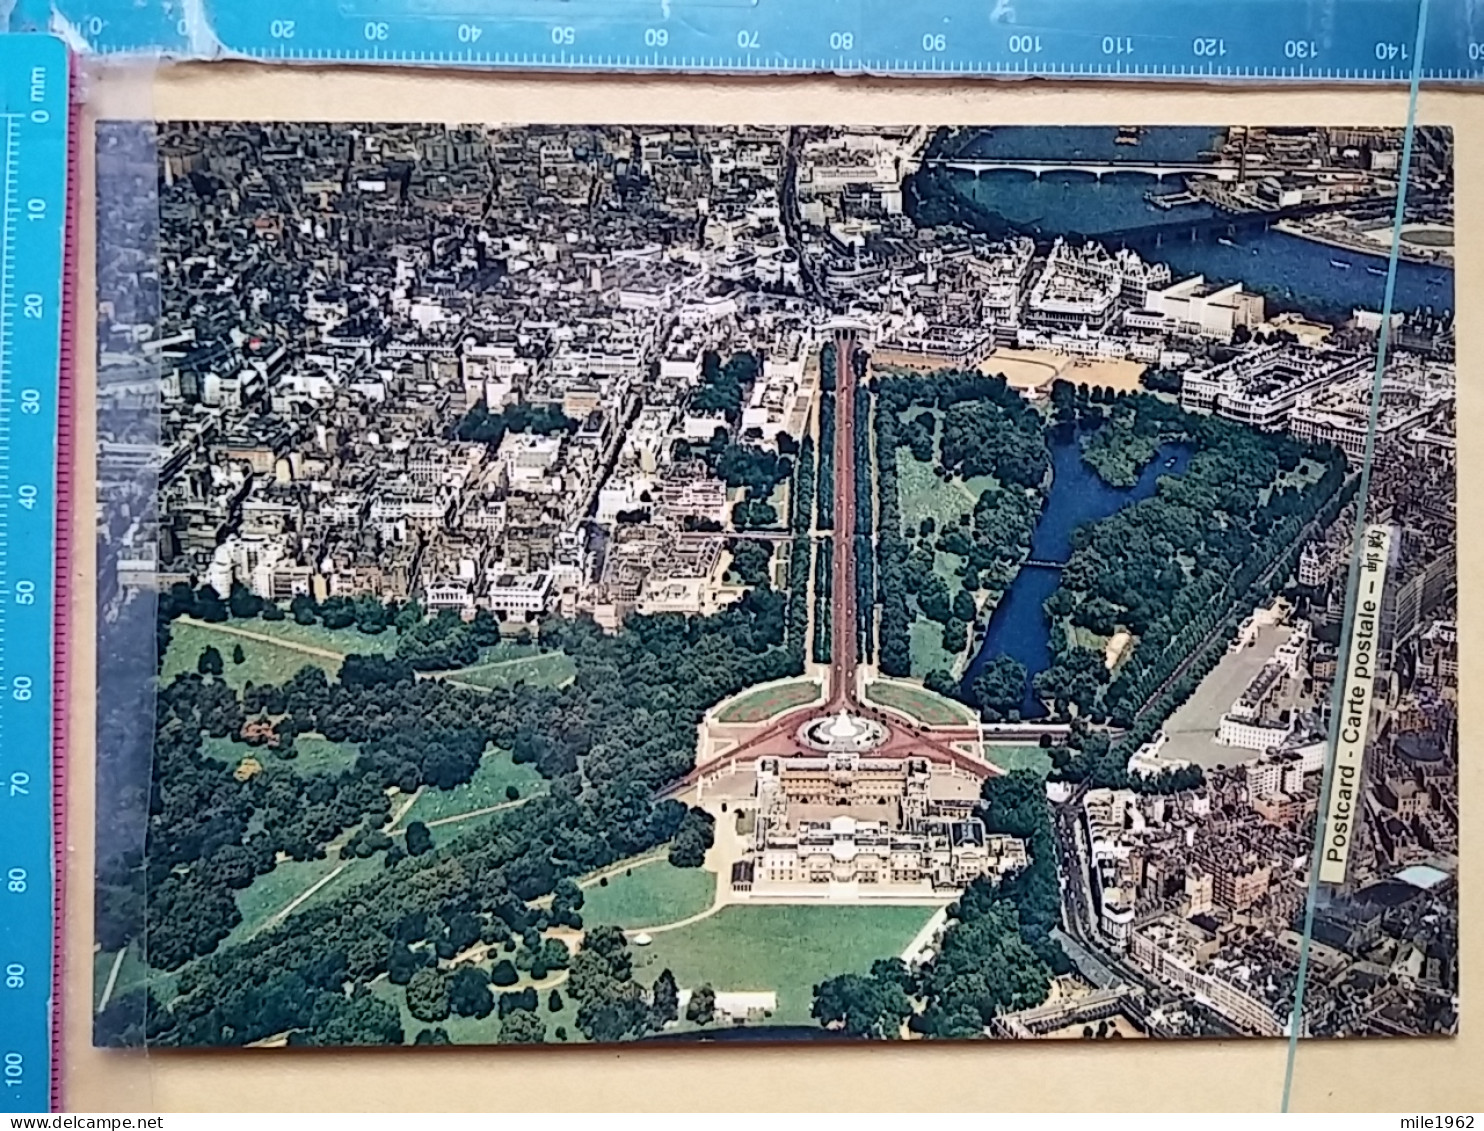 KOV 540-17 - LONDON, England, - Buckingham Palace